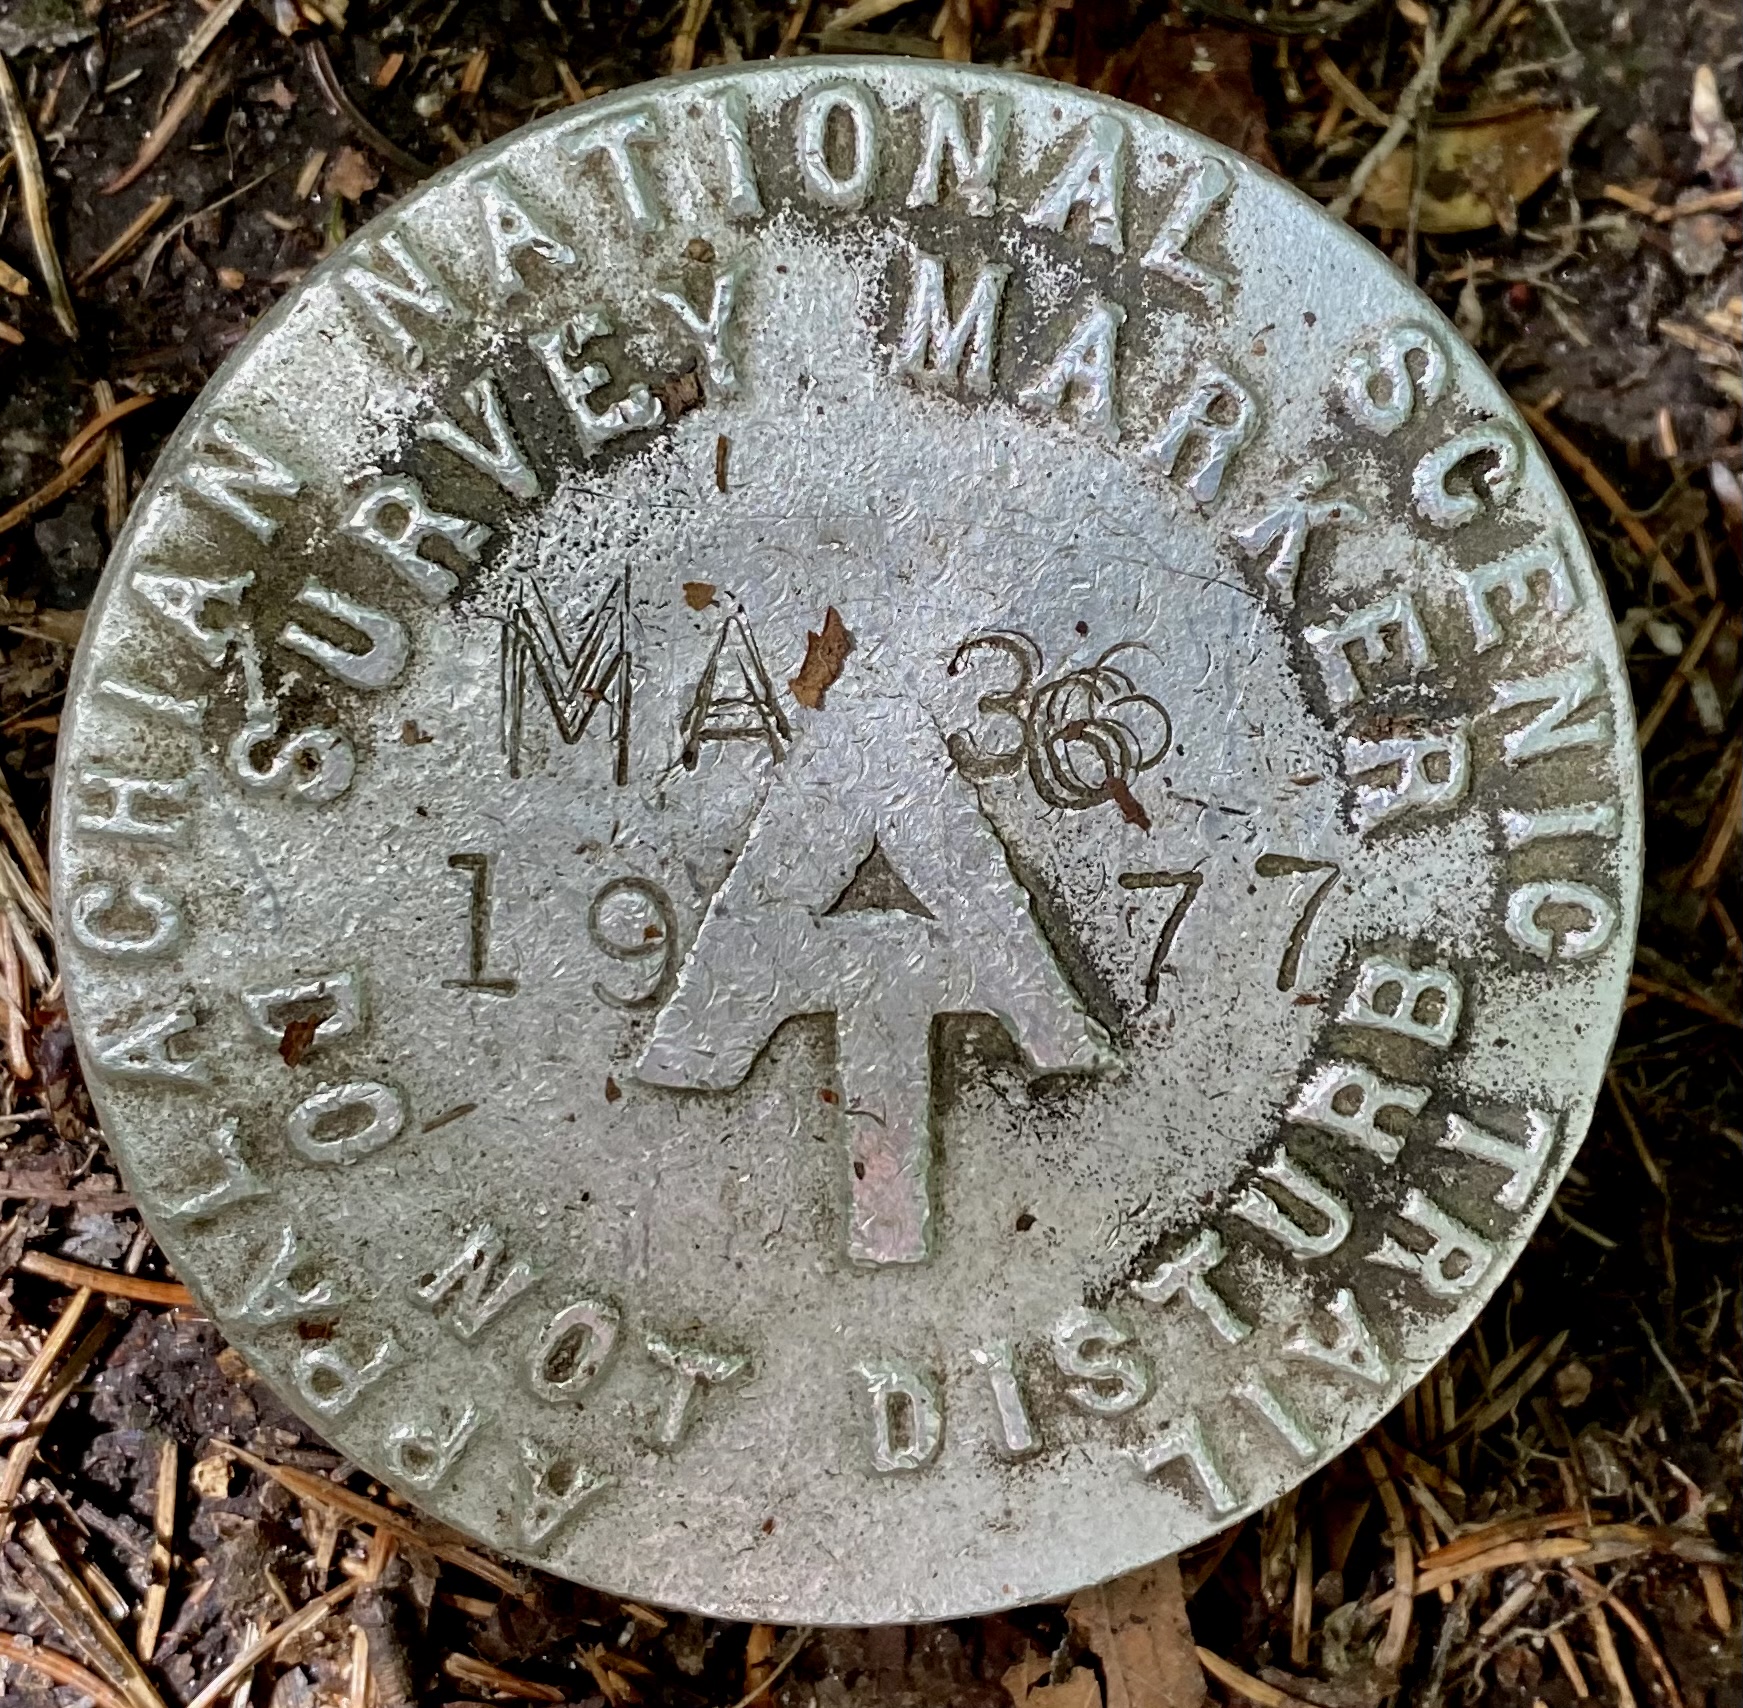 Thru-hiking Lingo for the Appalachian Trail